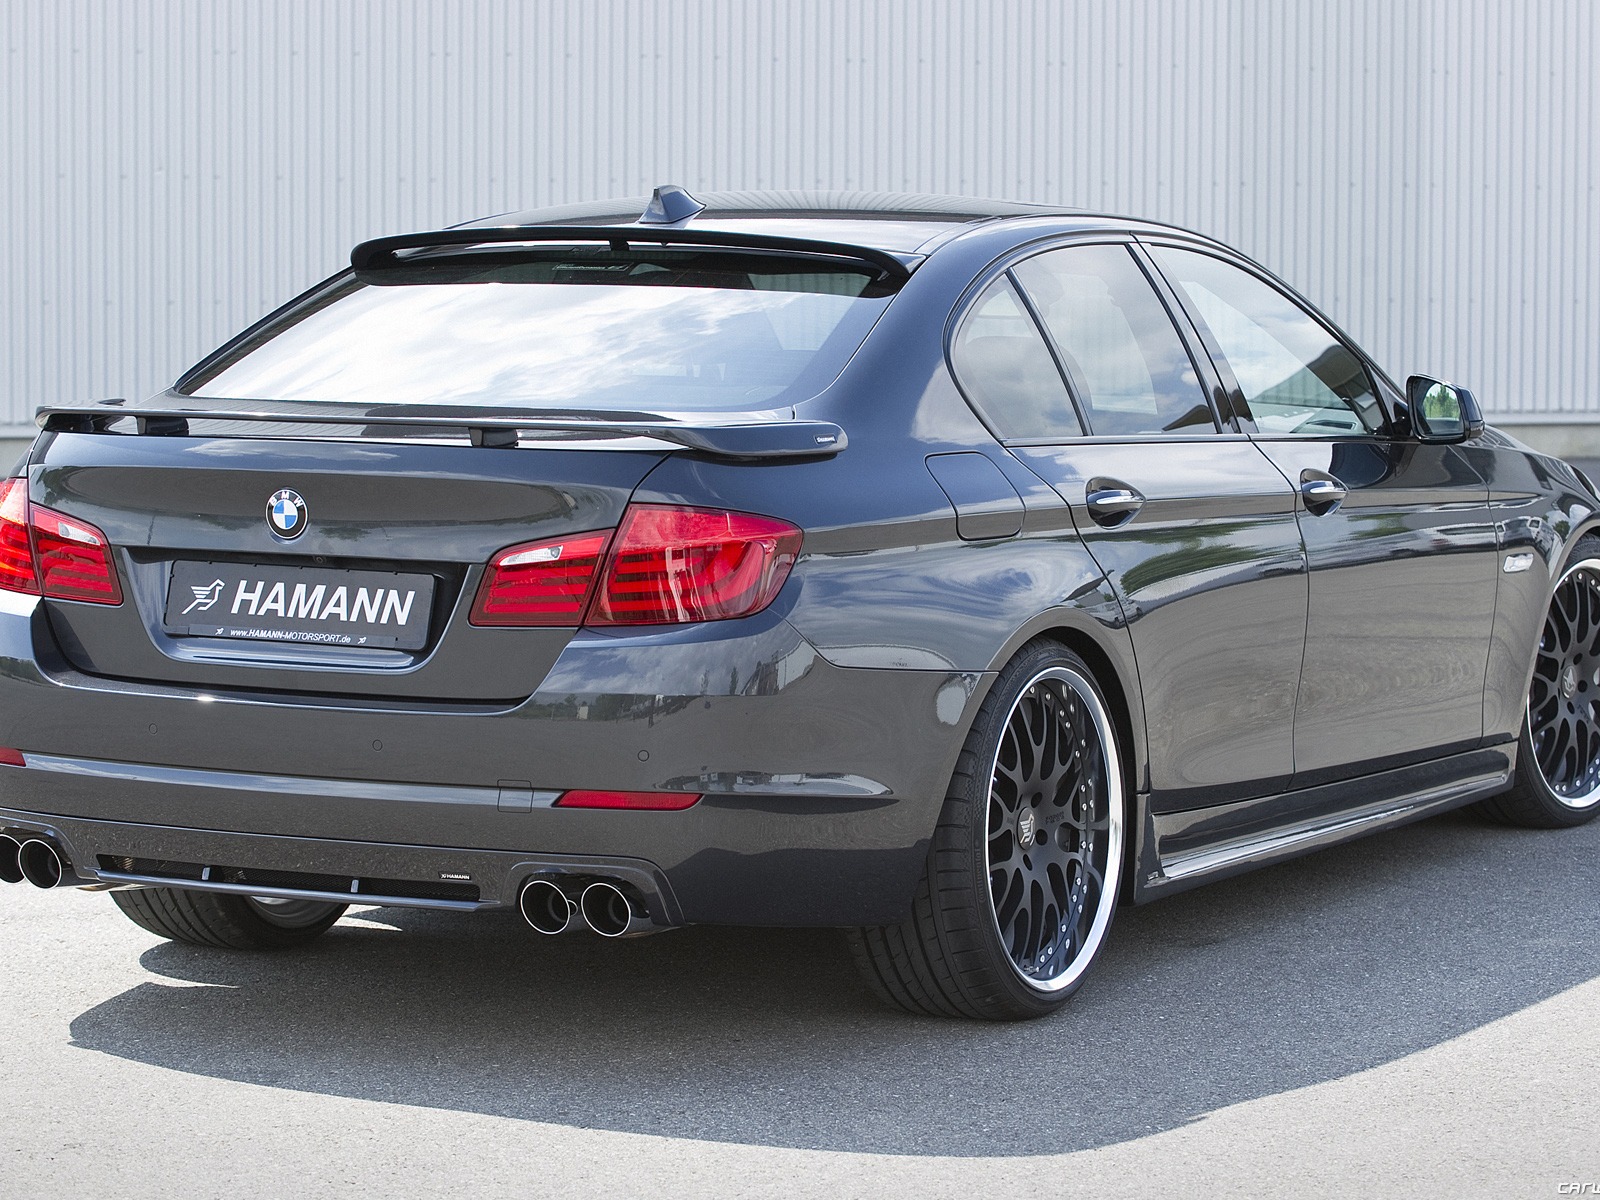 Hamann BMW 5-series F10 - 2010 寶馬 #6 - 1600x1200